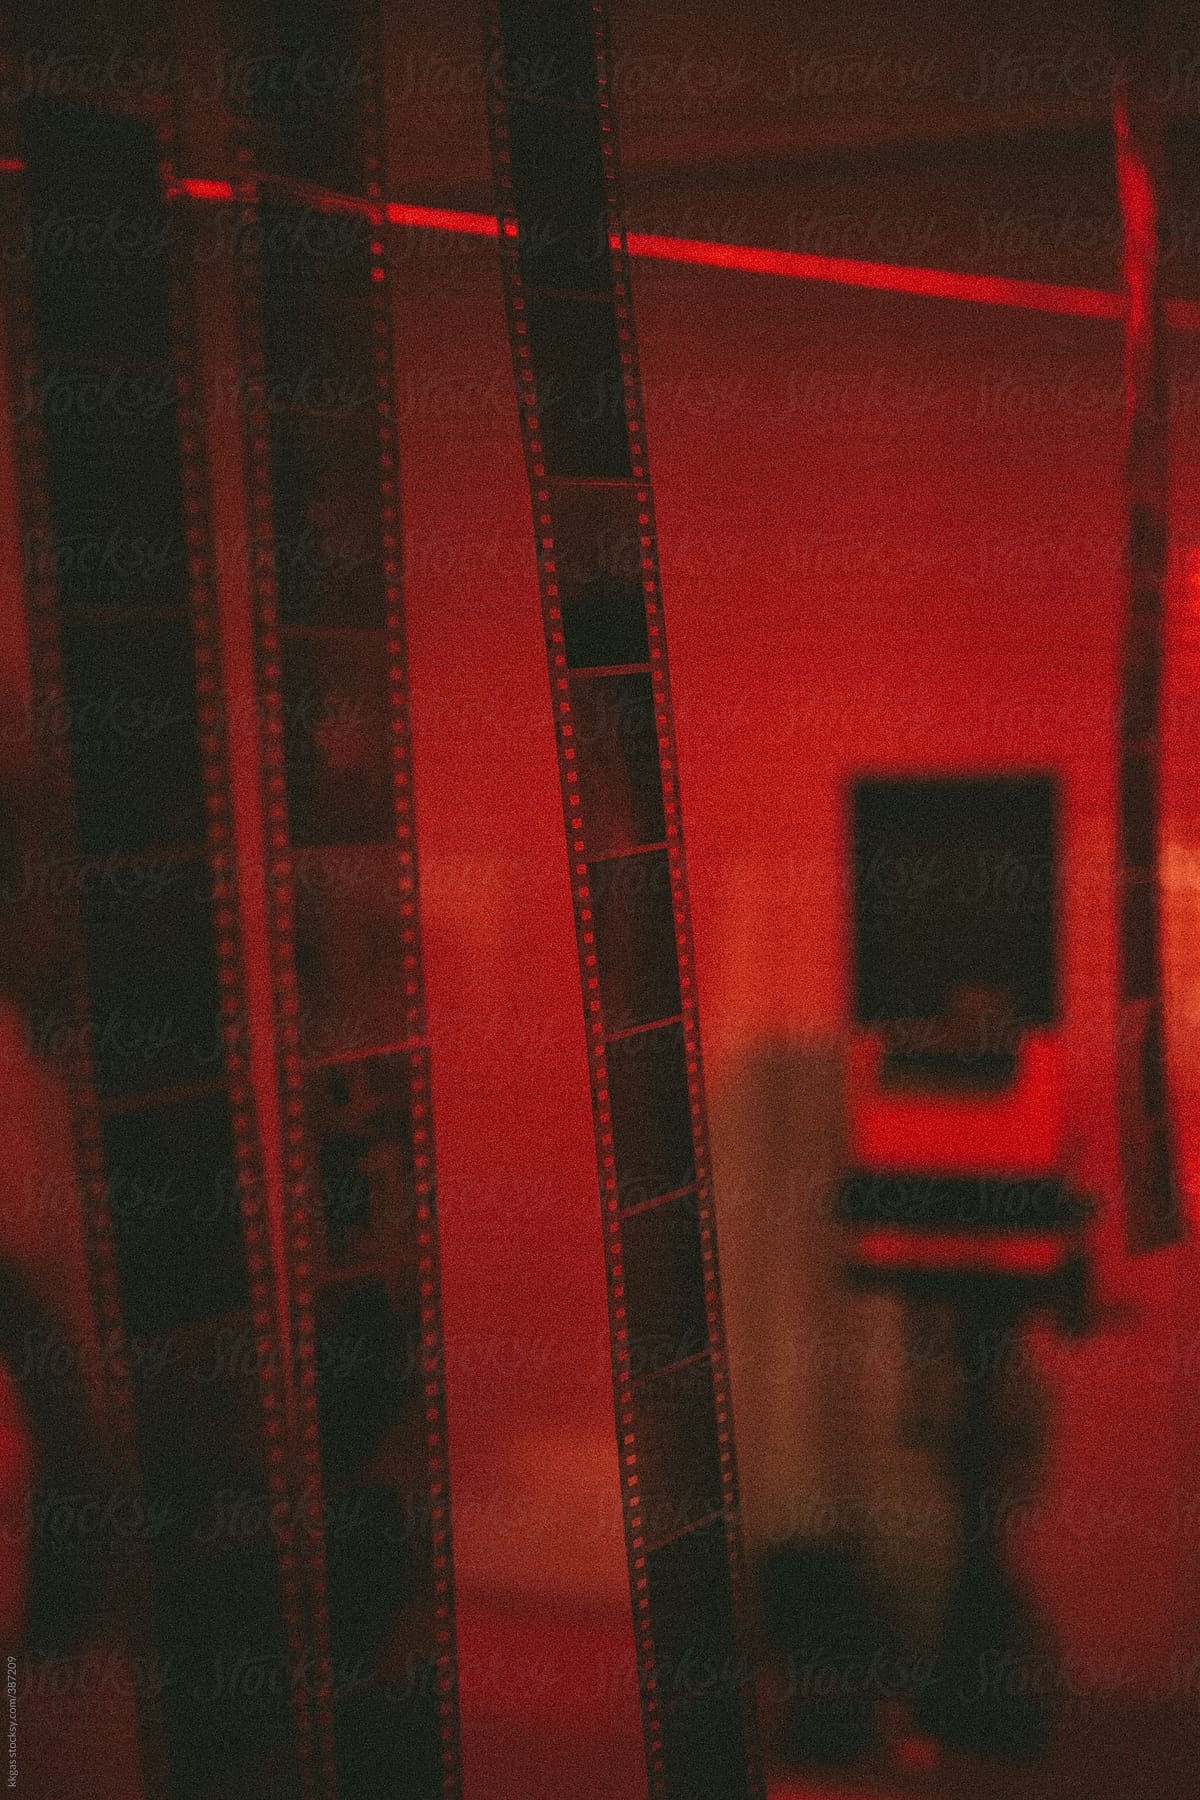 Film negatives in a darkroom.